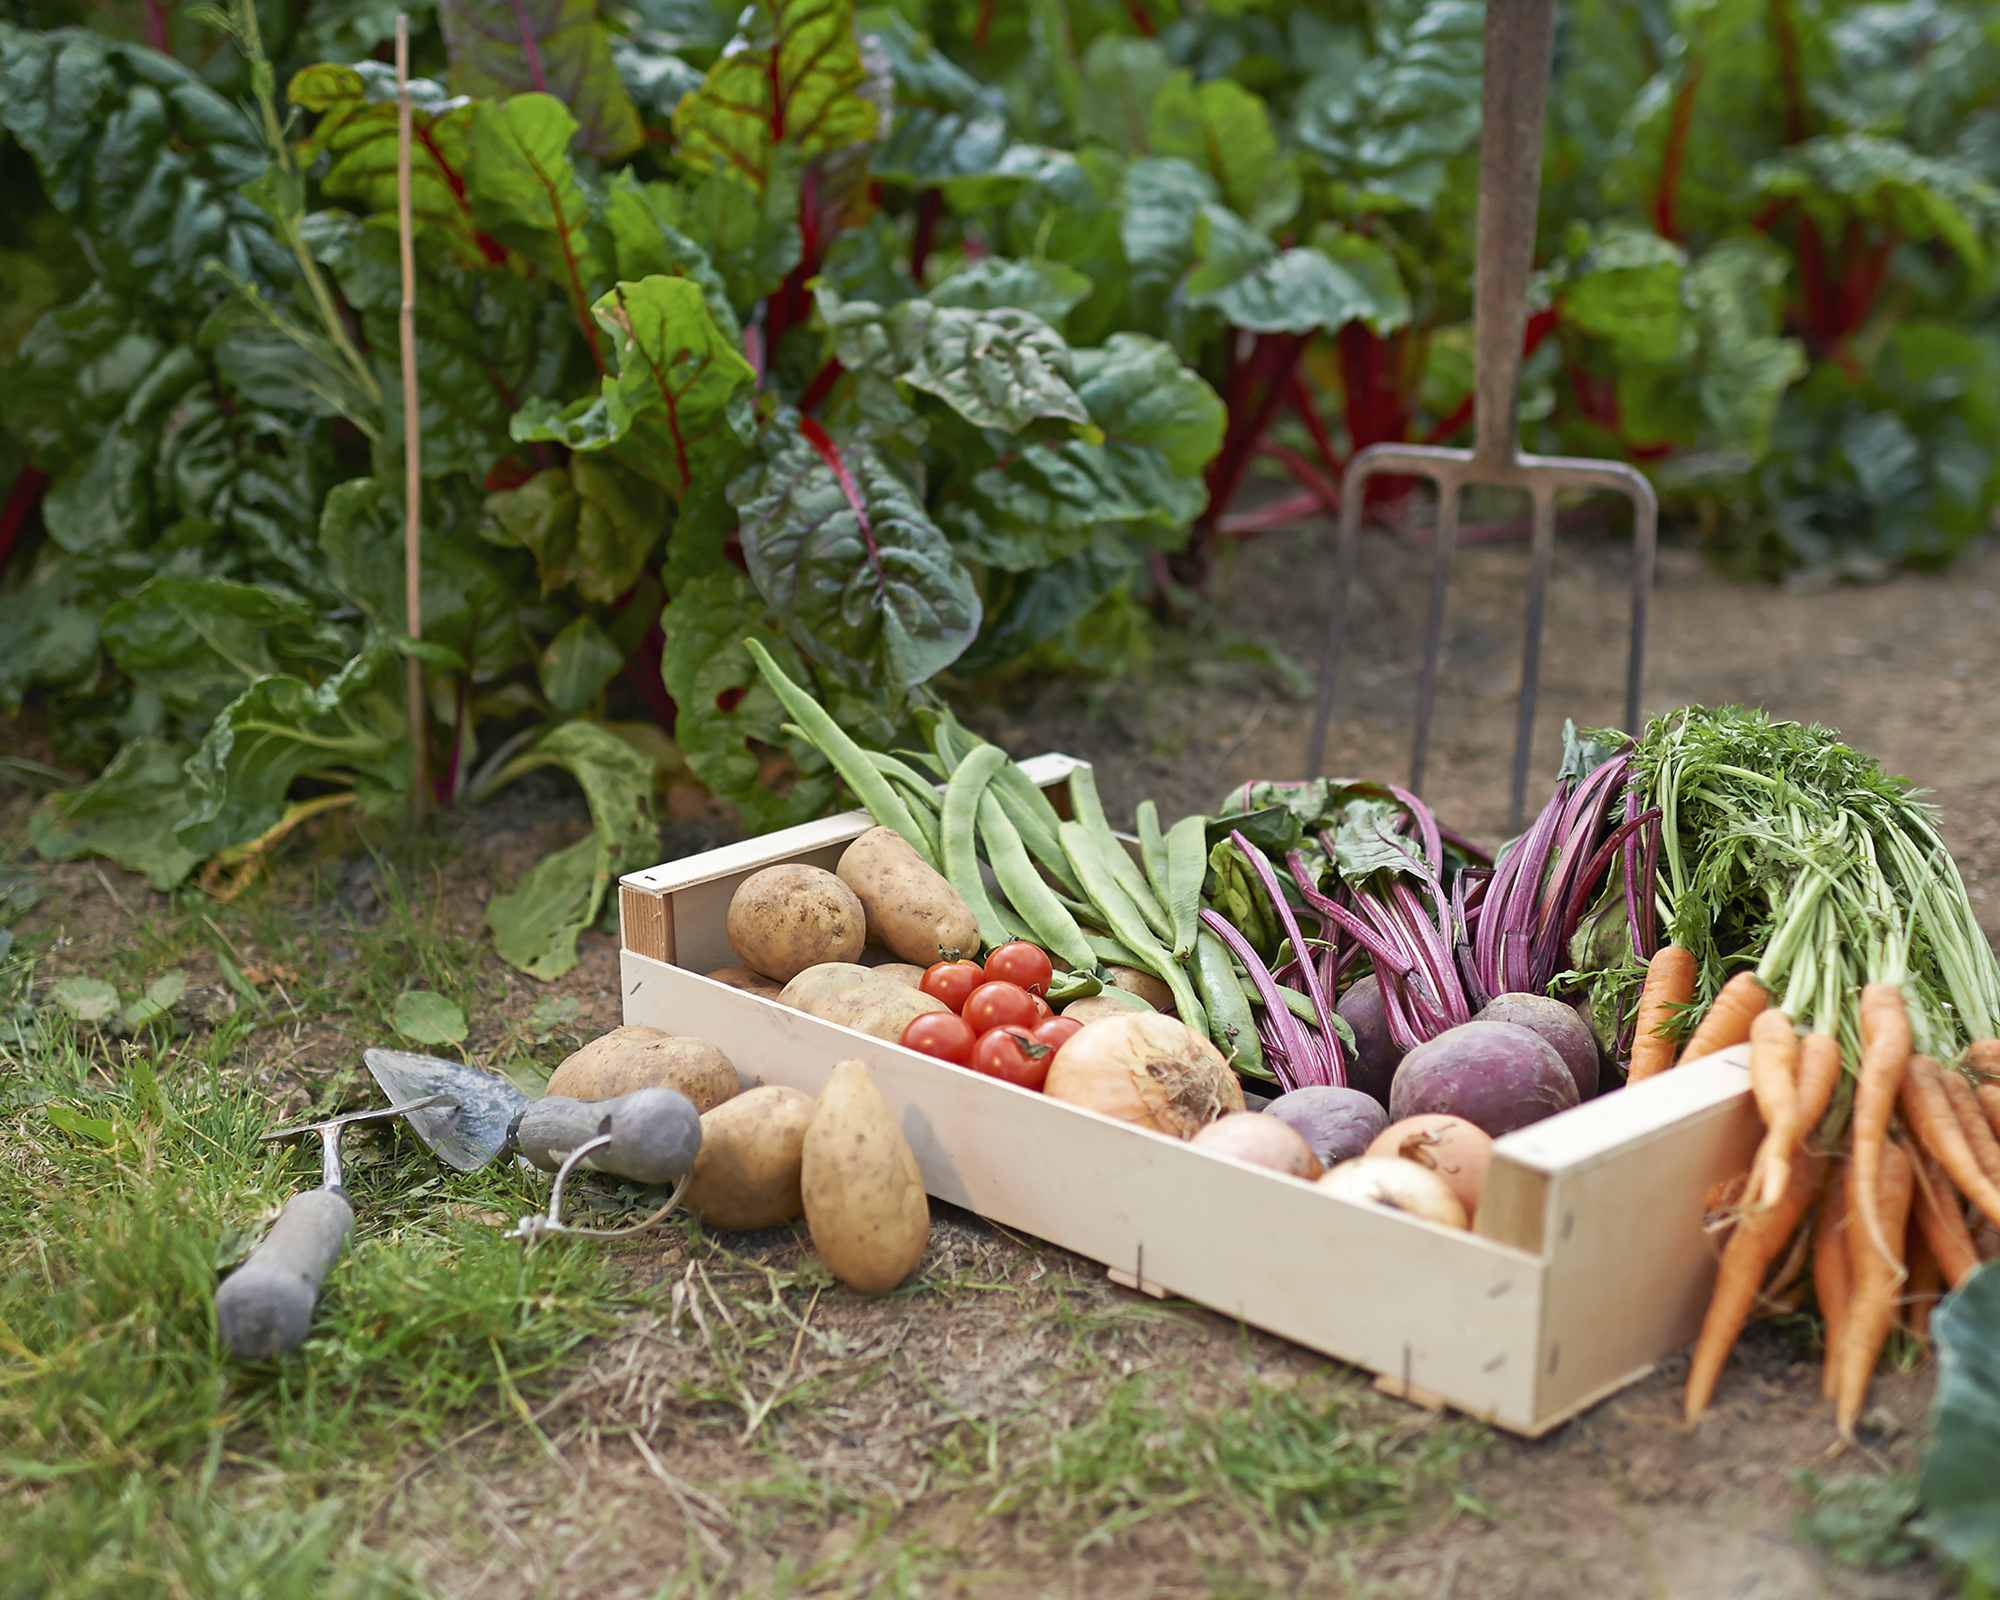 Crate full of freshly harvested home-grown vegetables